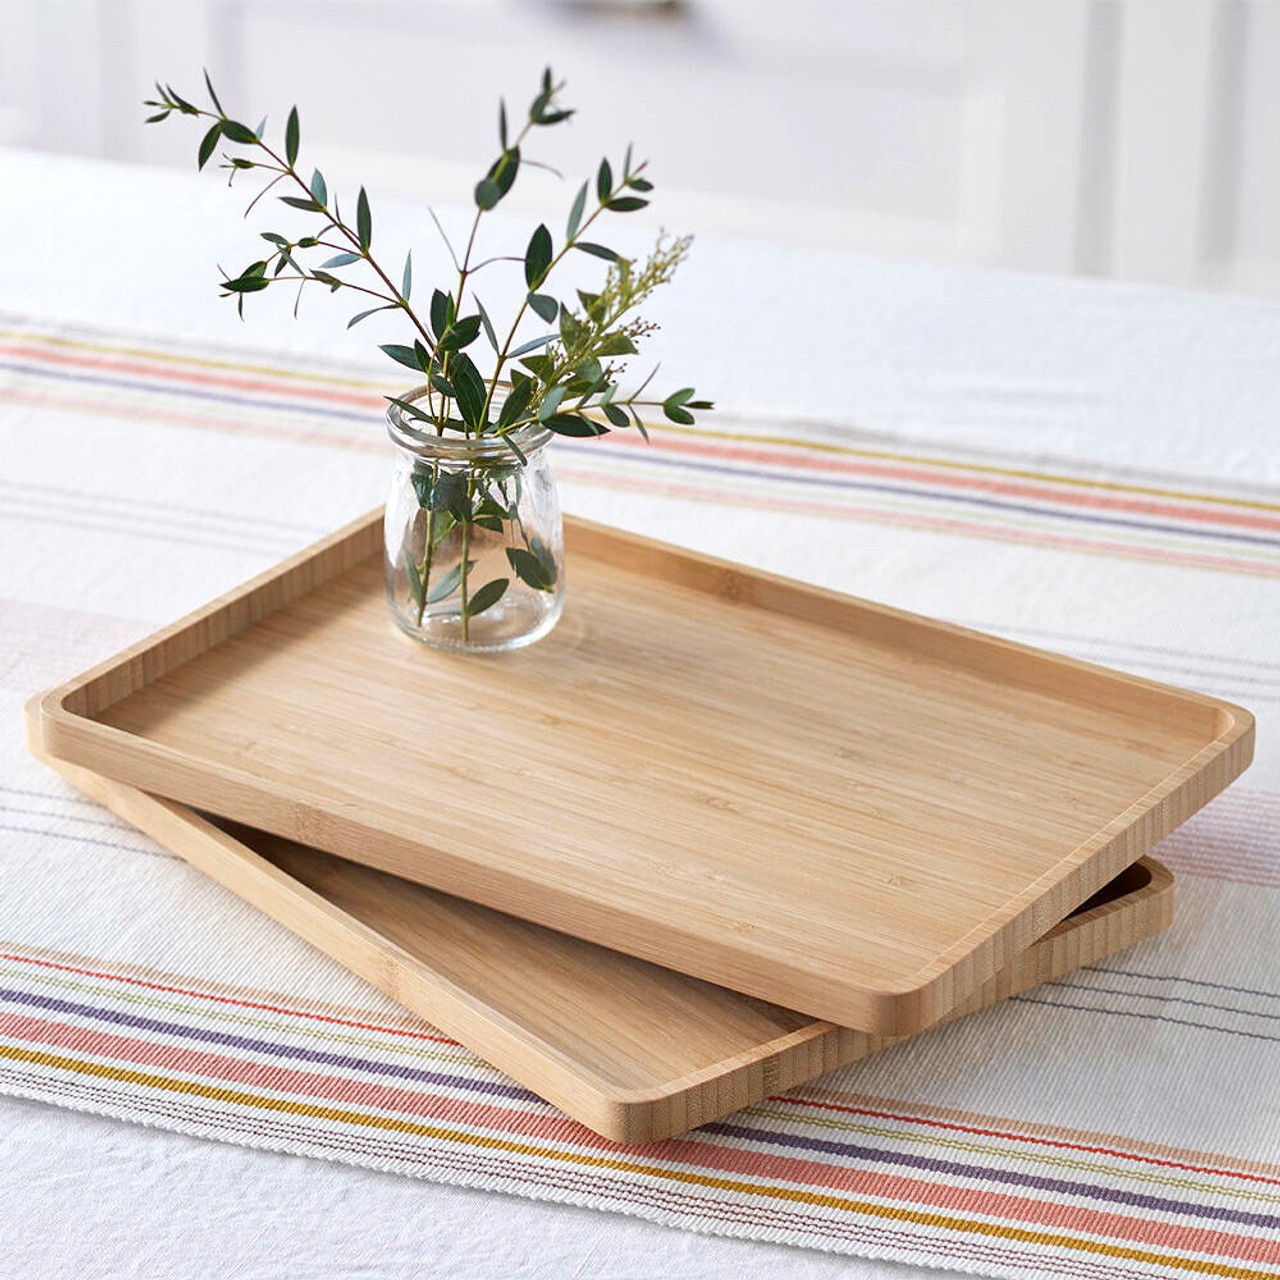 02 Bamboo Wood Plank Table Tops: Natural; Quick Ship